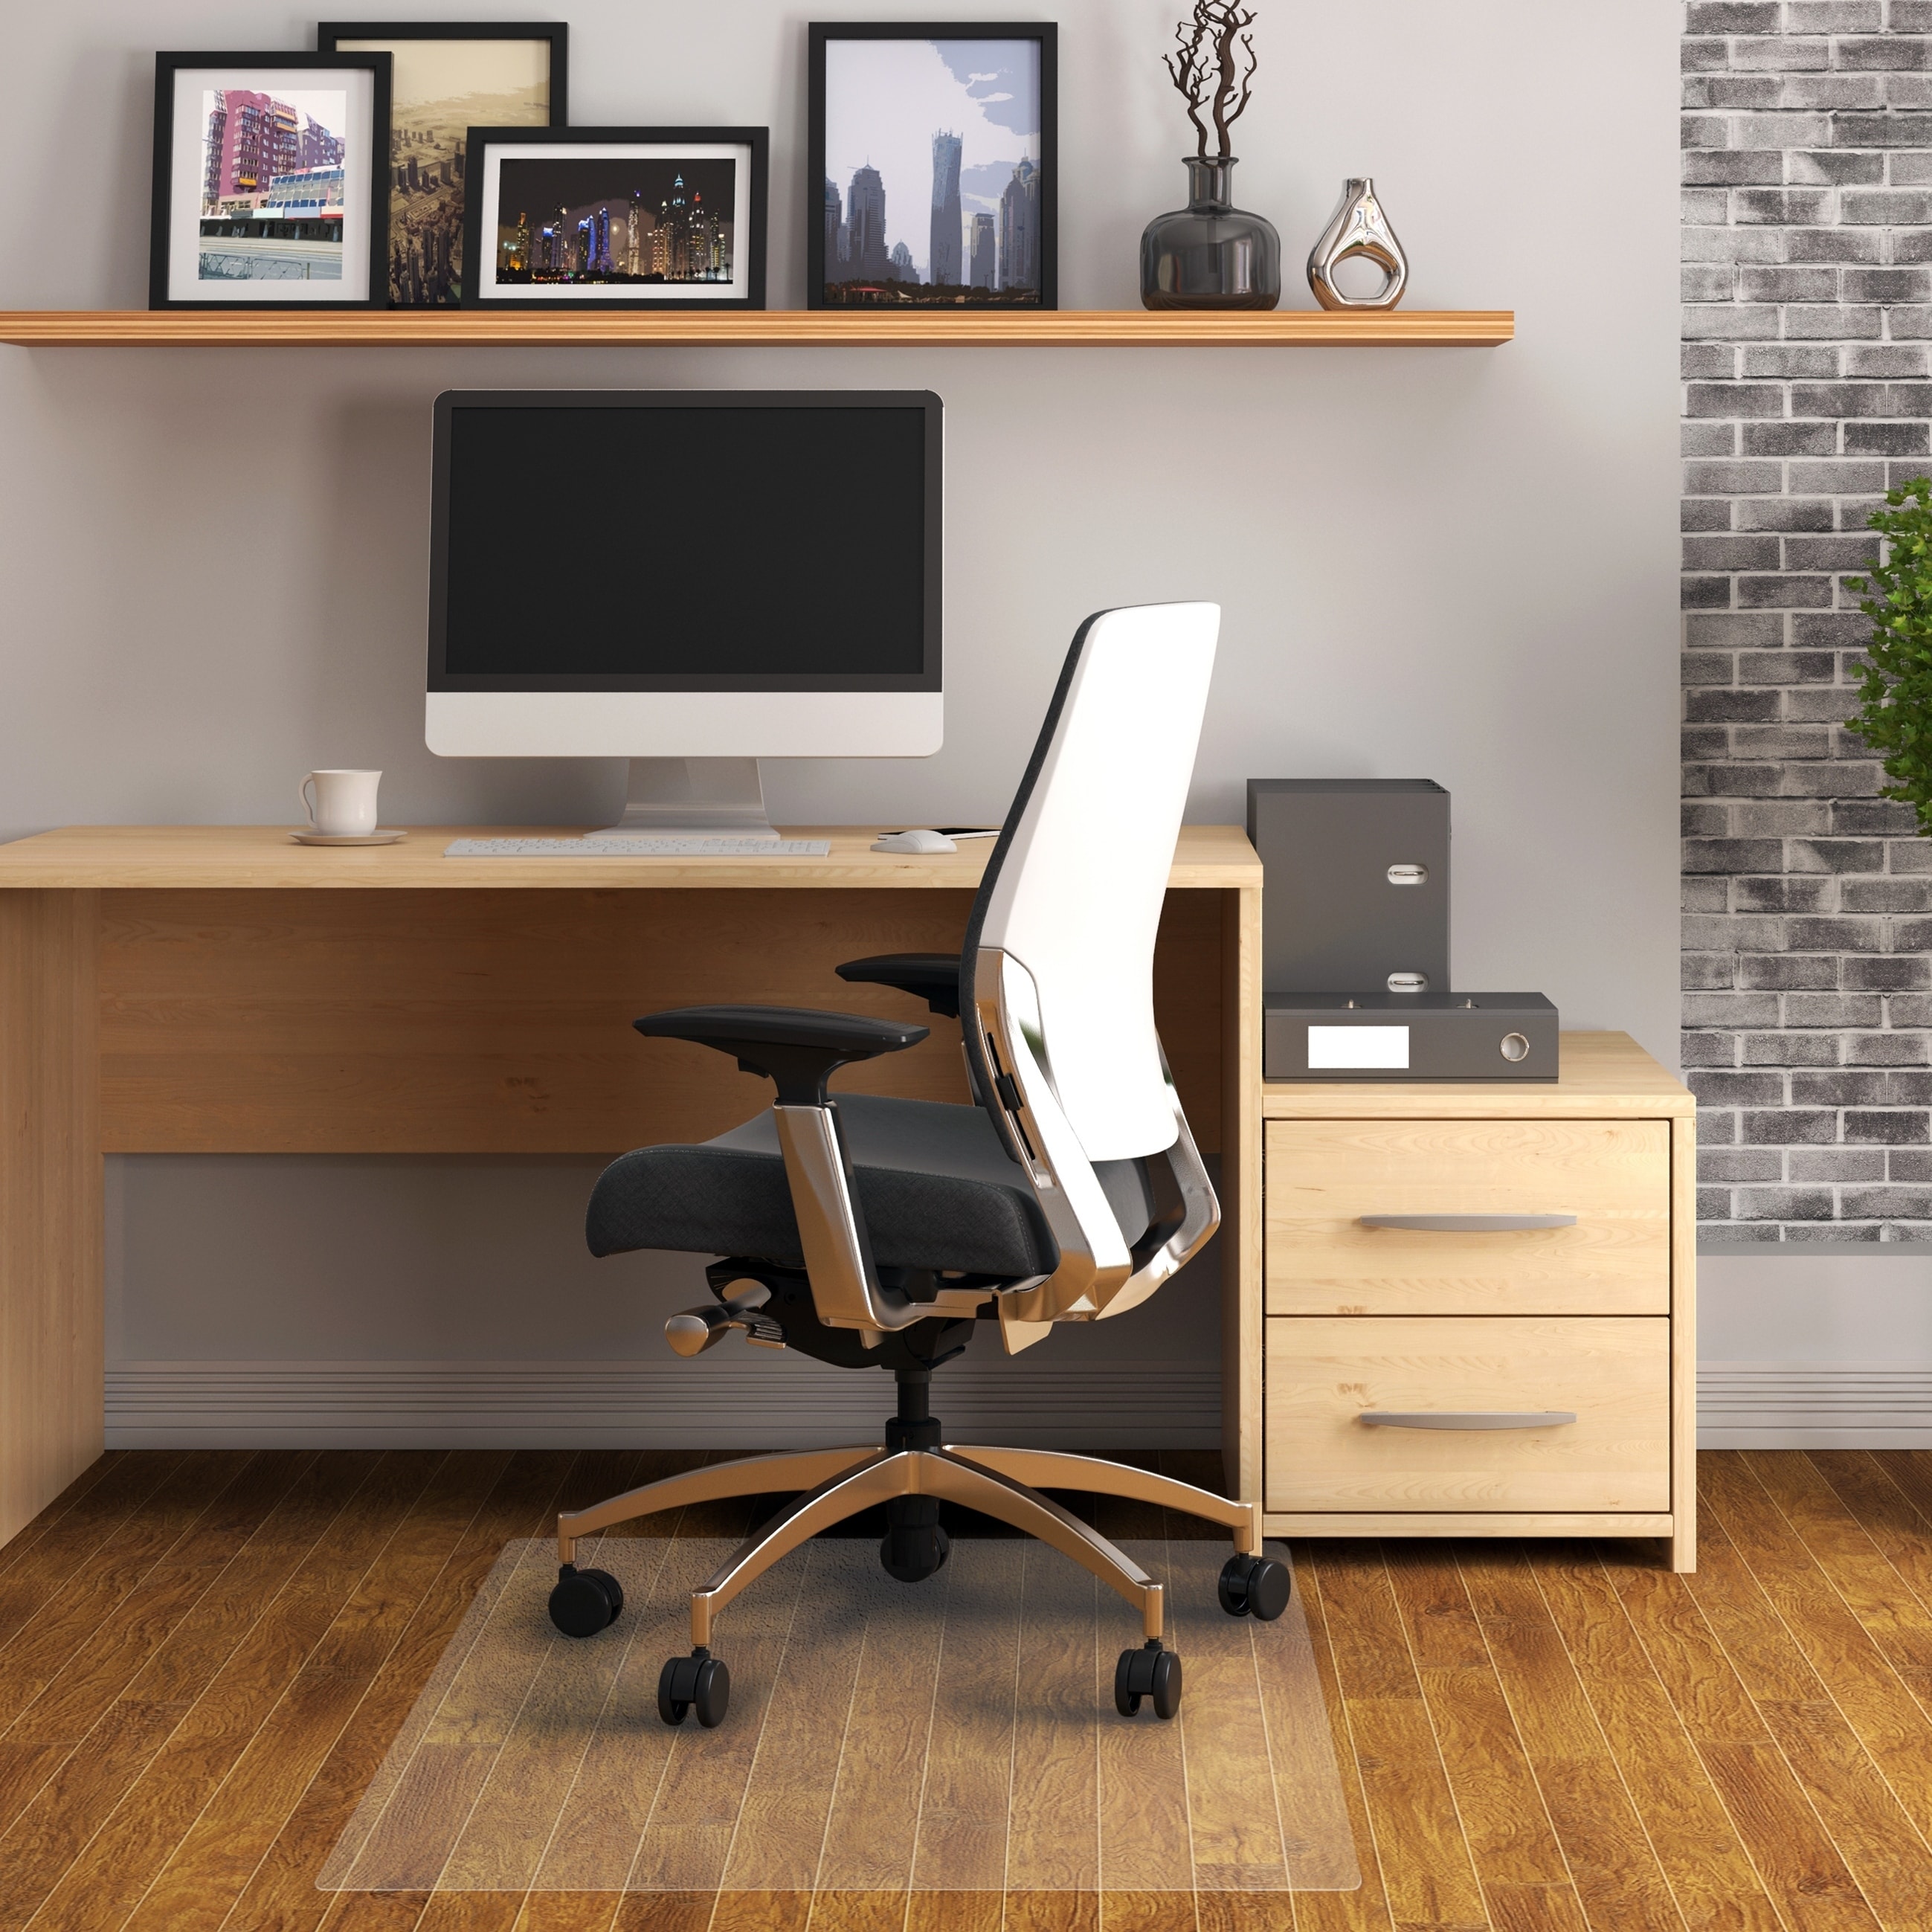 Floortex Cleartex Advantagemat Pvc Chair Mat (48 X 79) For Hard Floor